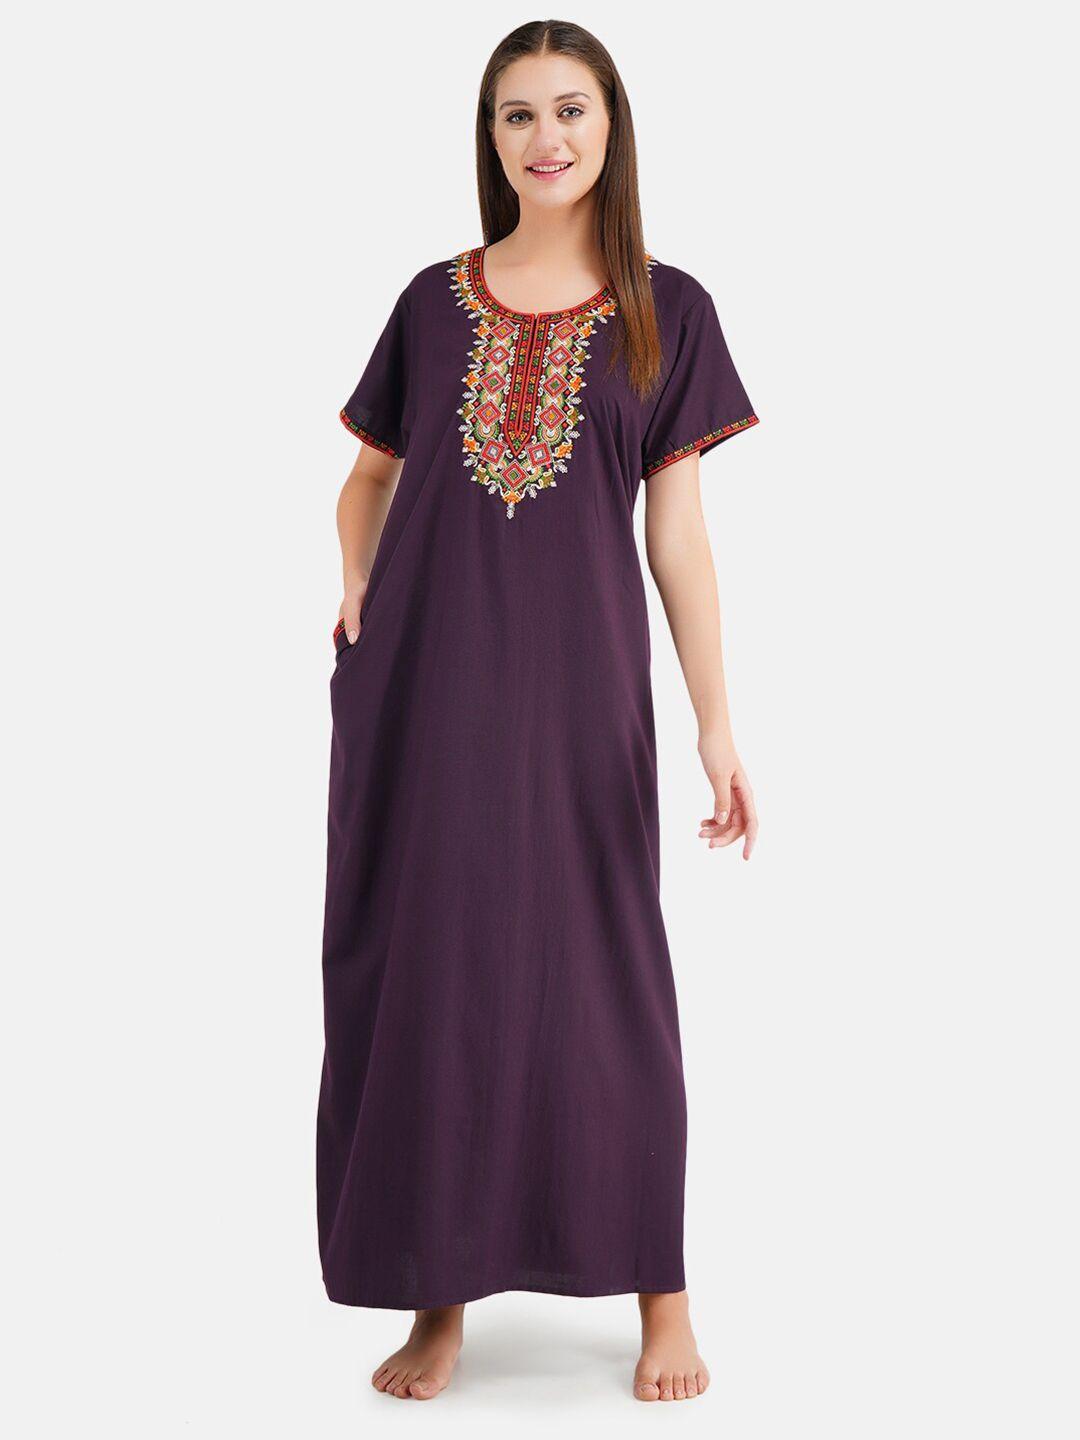 koi sleepwear woman purple embroidered maxi cotton nightdress with pockets